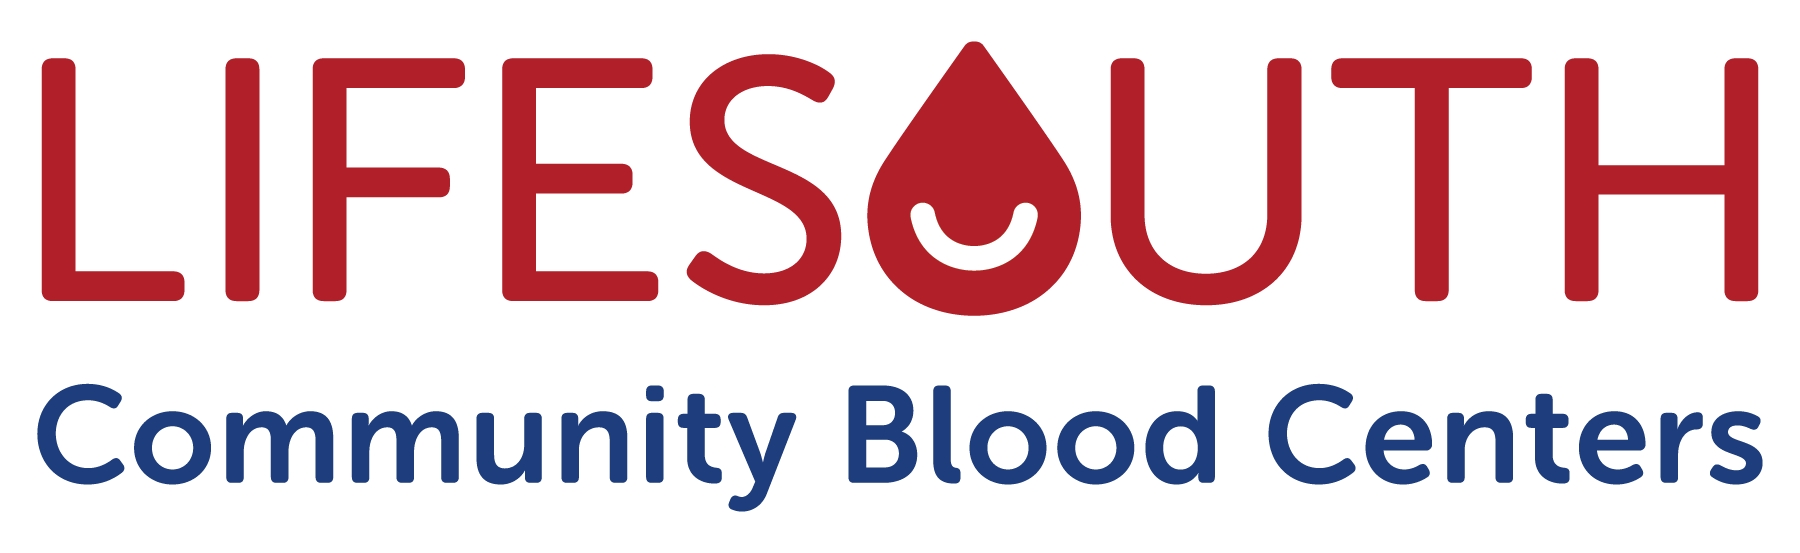 LifeSouth Community Blood Center